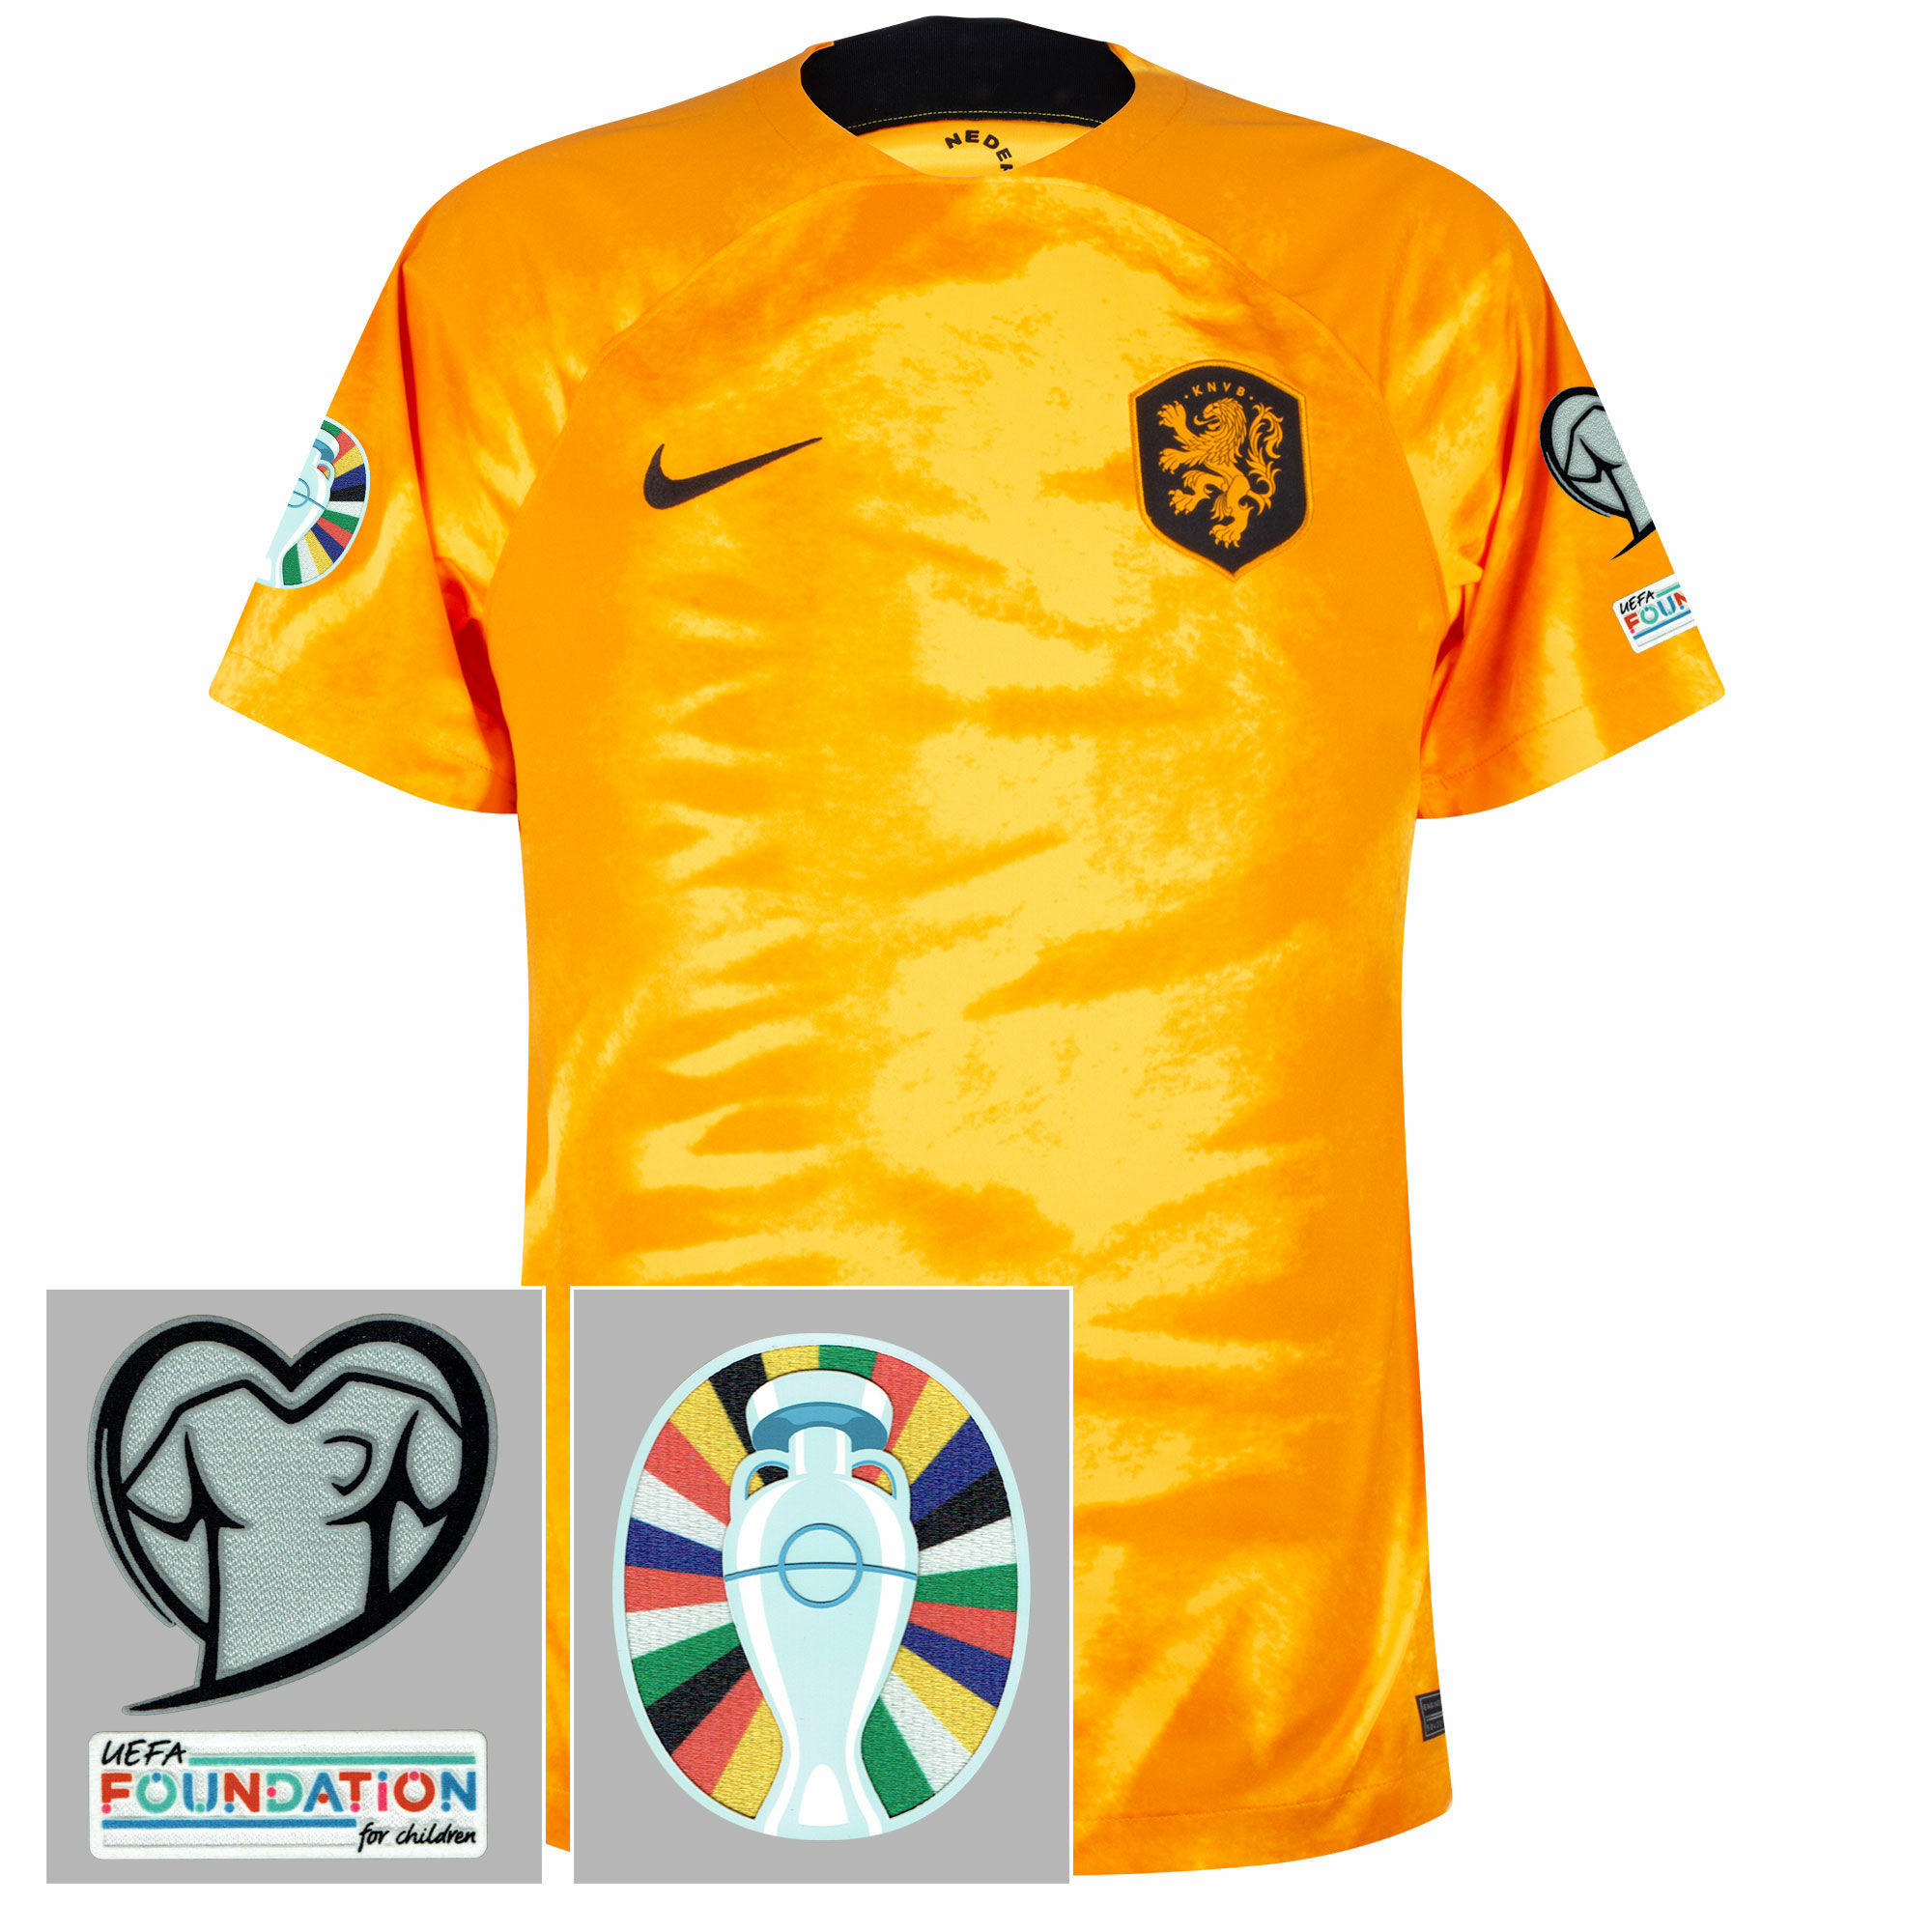 Holland Patch - Soccer Shop USA